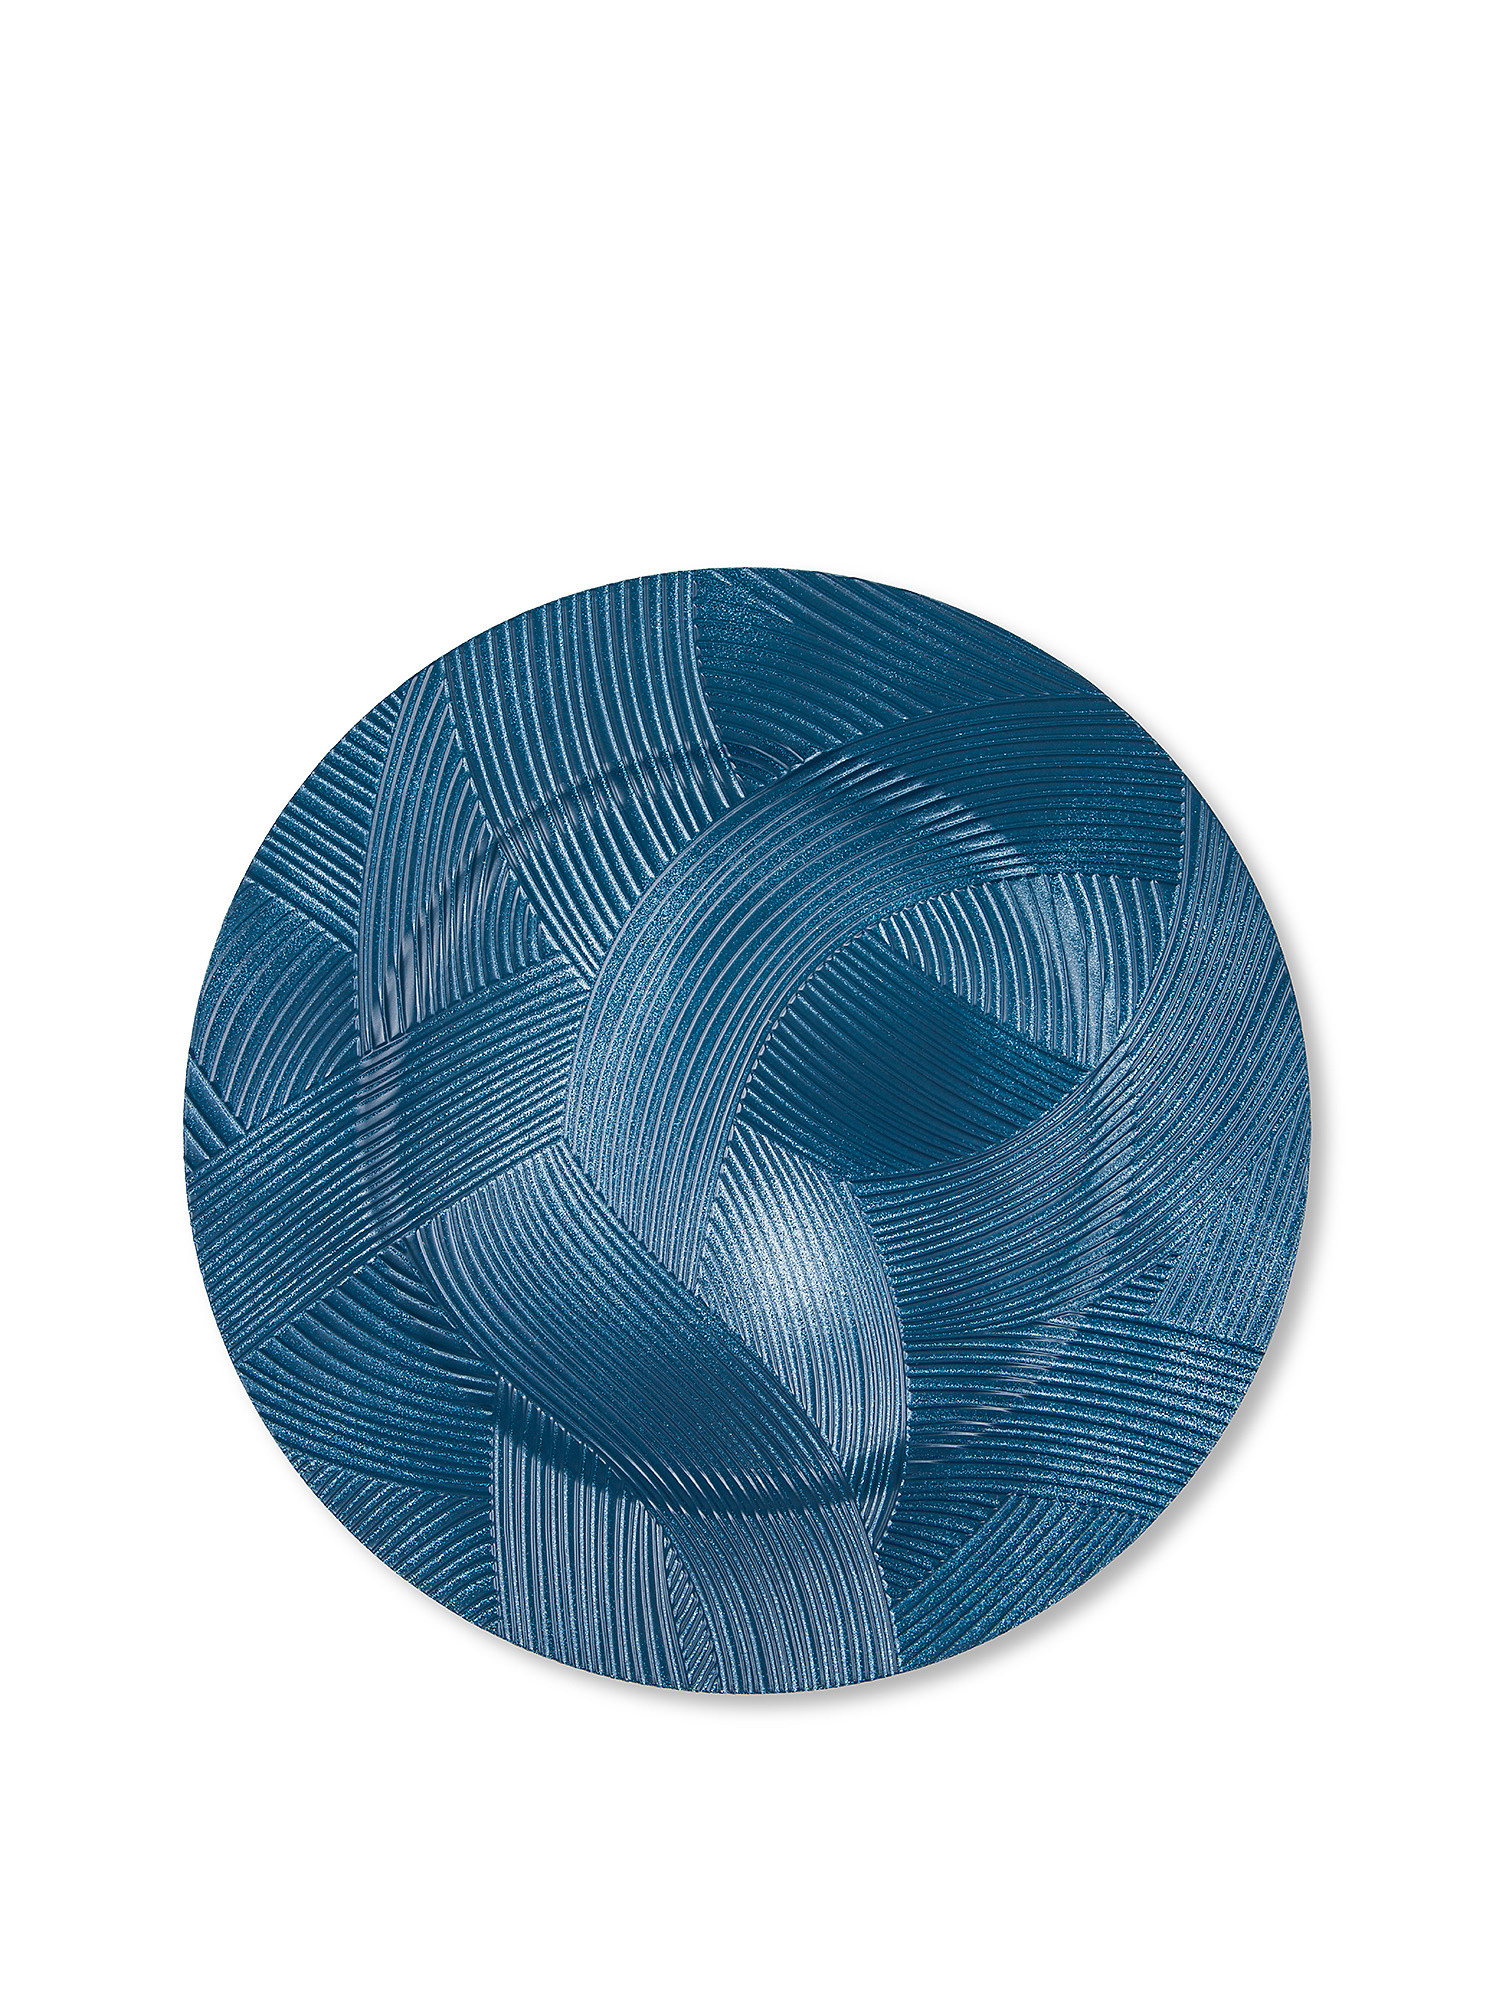 Blue waves plastic underplate, Blue, large image number 0